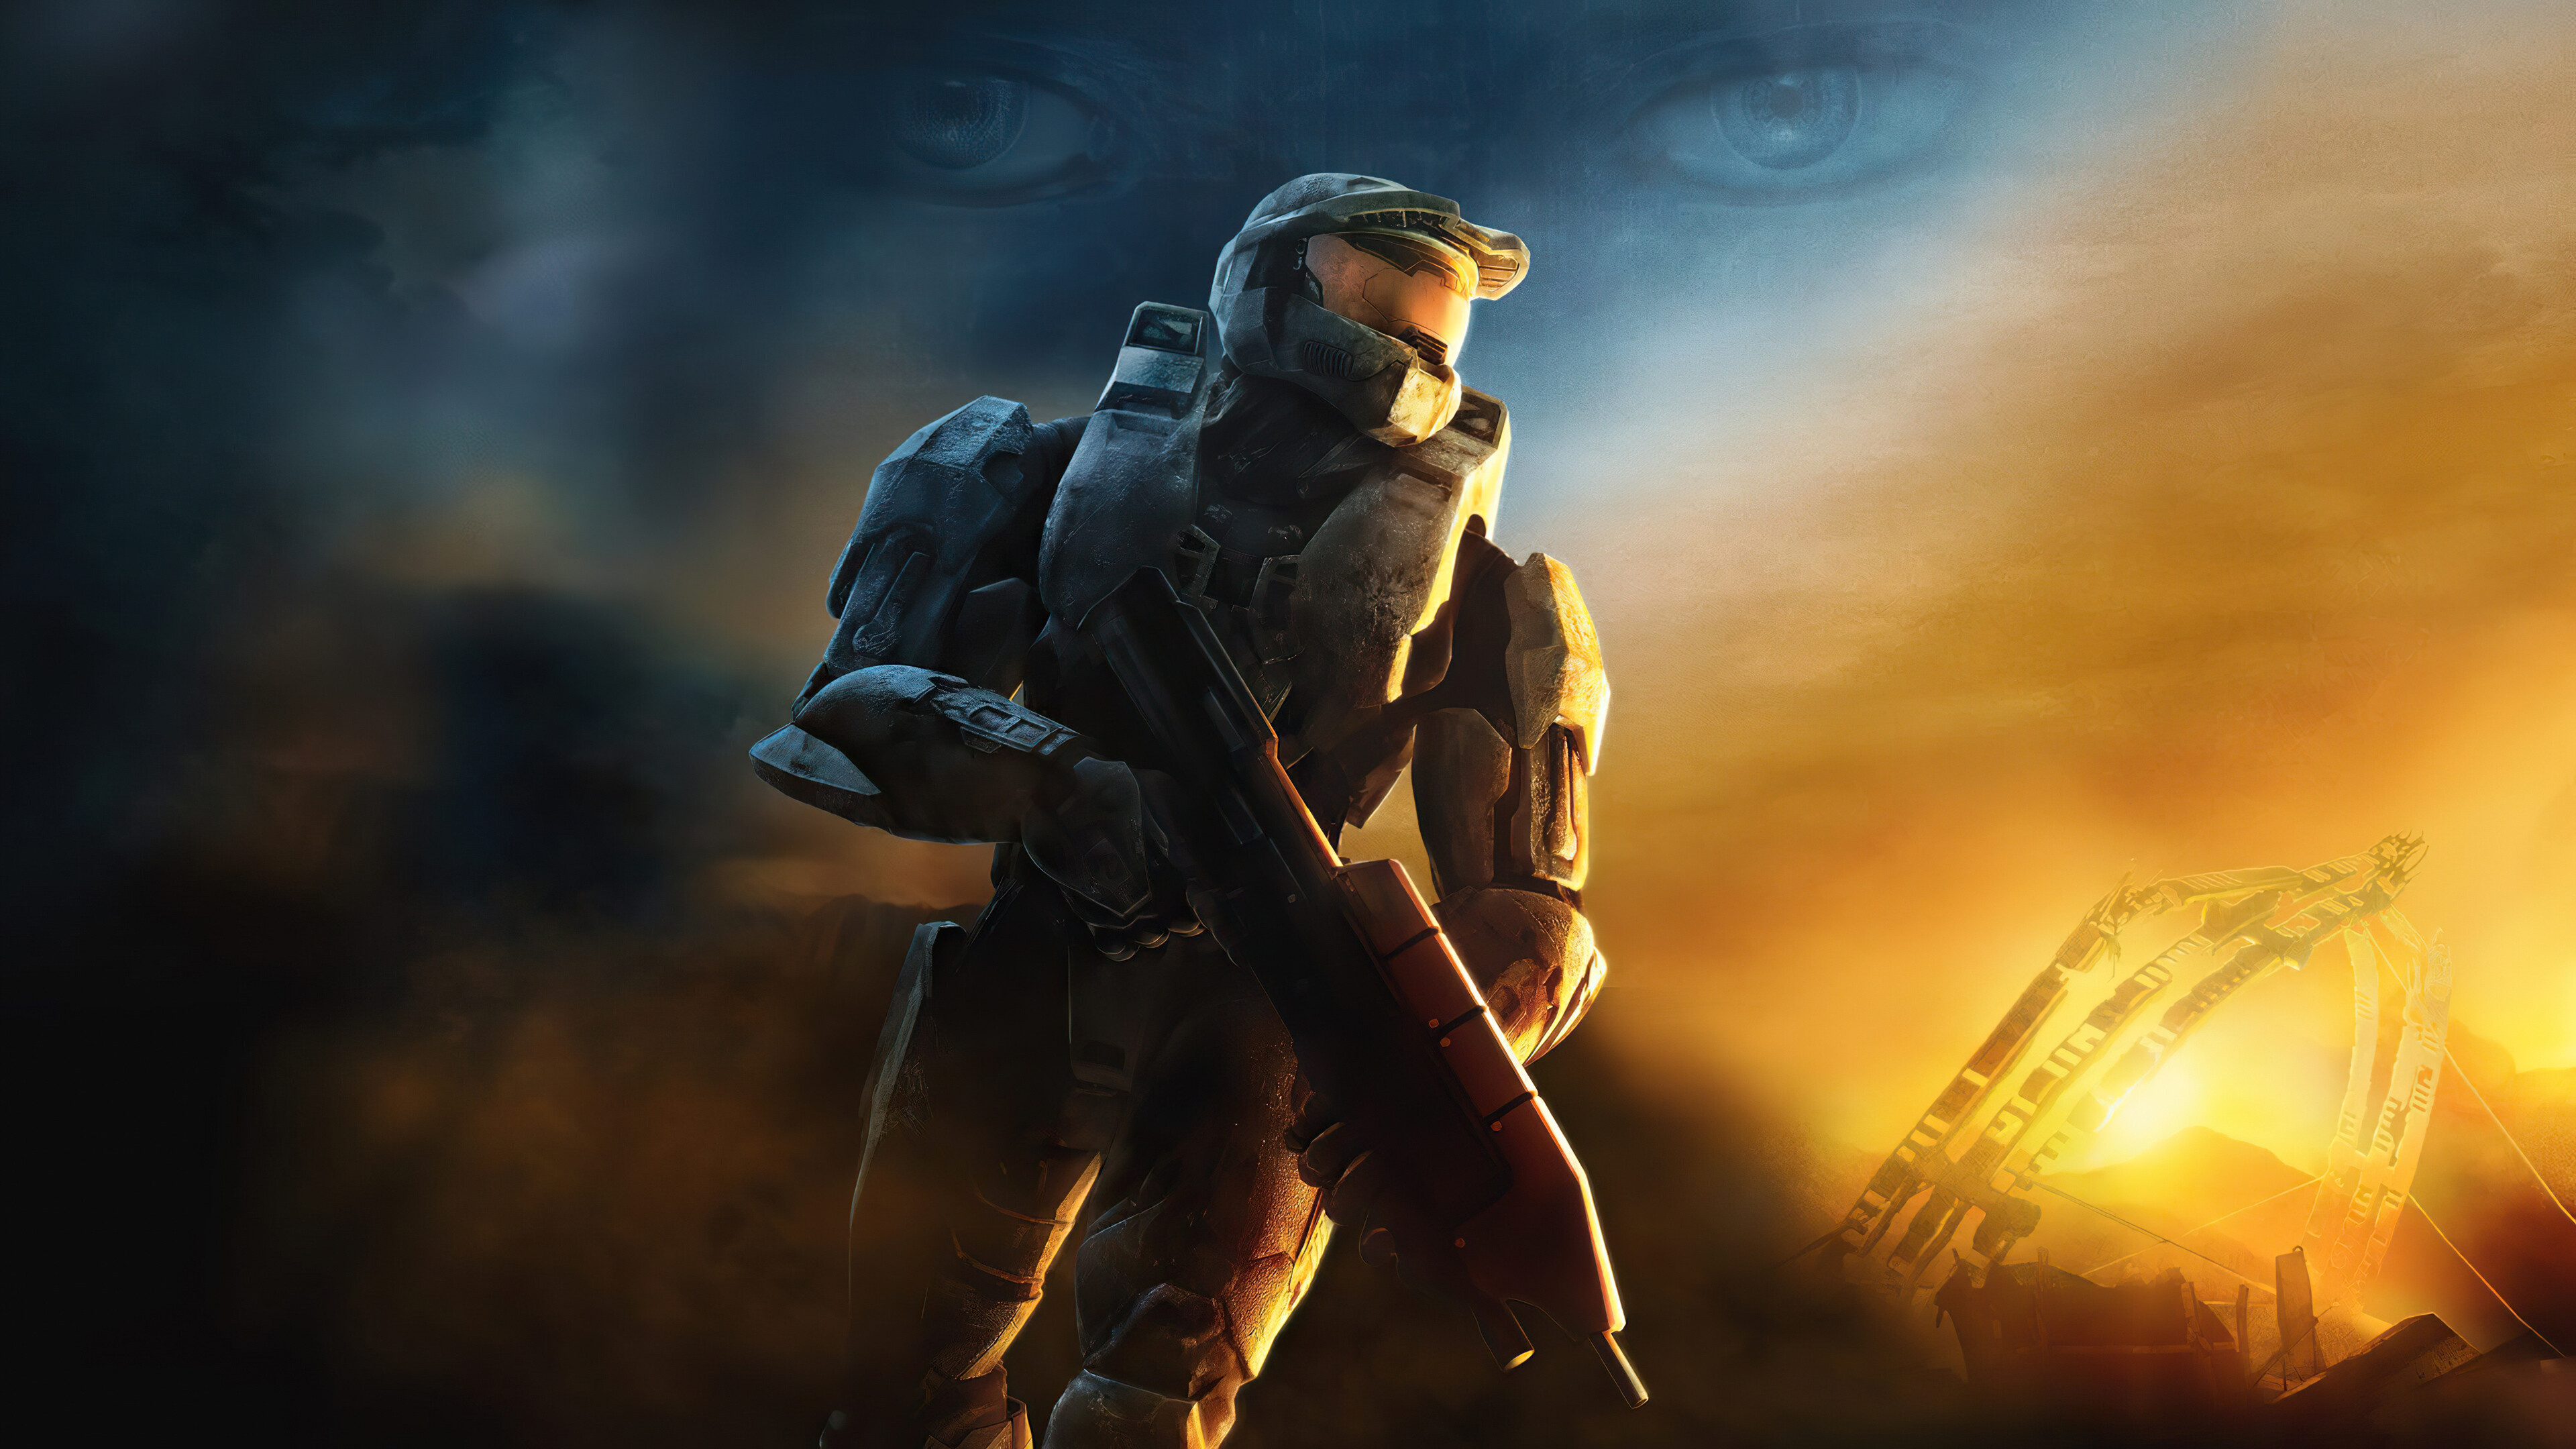 Halo 3 Chief, 4K gaming, Legendary hero, Futuristic visuals, 3840x2160 4K Desktop